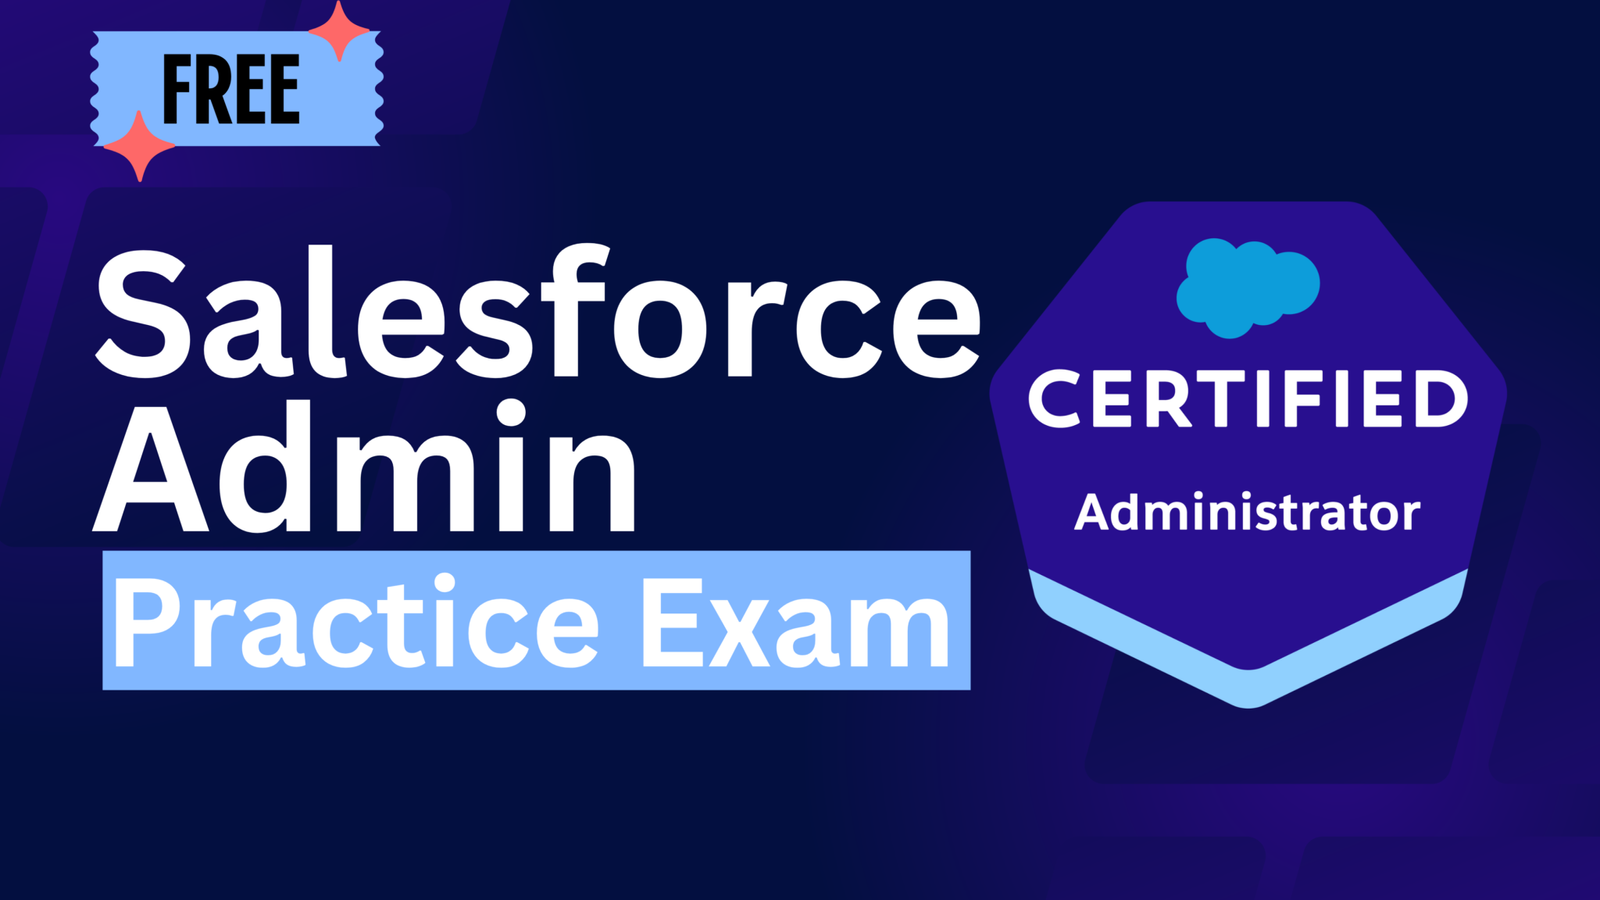 Free Salesforce Admin Practice Exam